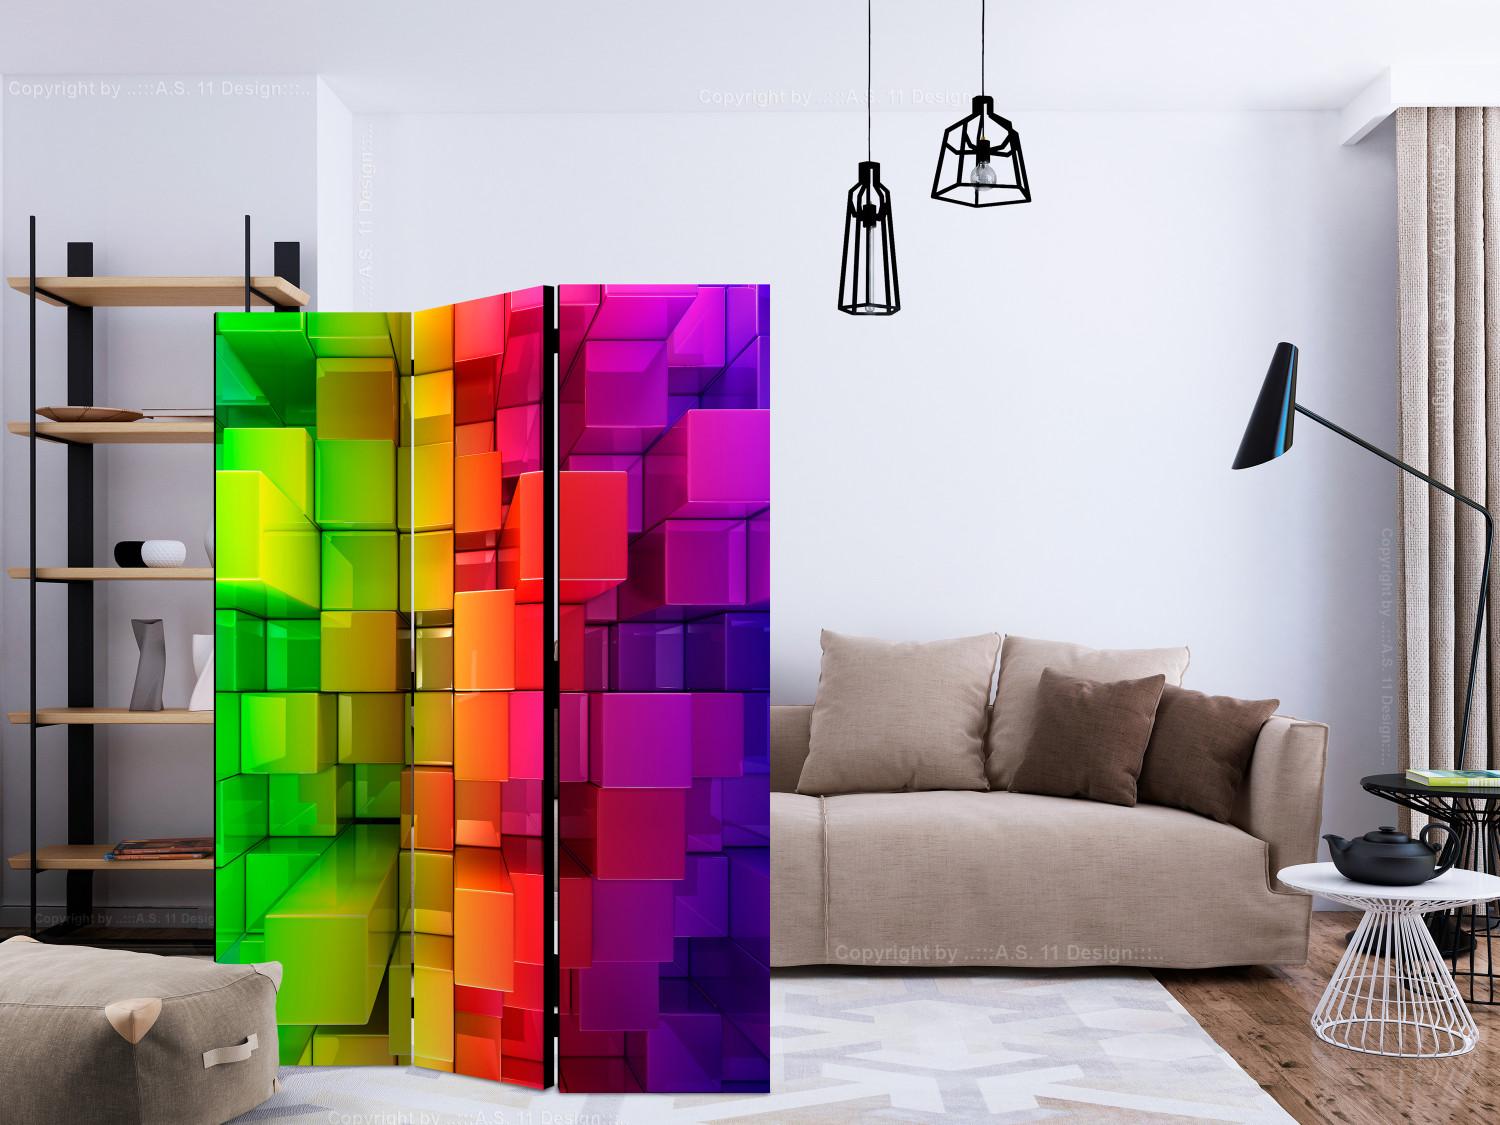 Room Divider Colorful Puzzle (3-piece) - multicolored geometric blocks